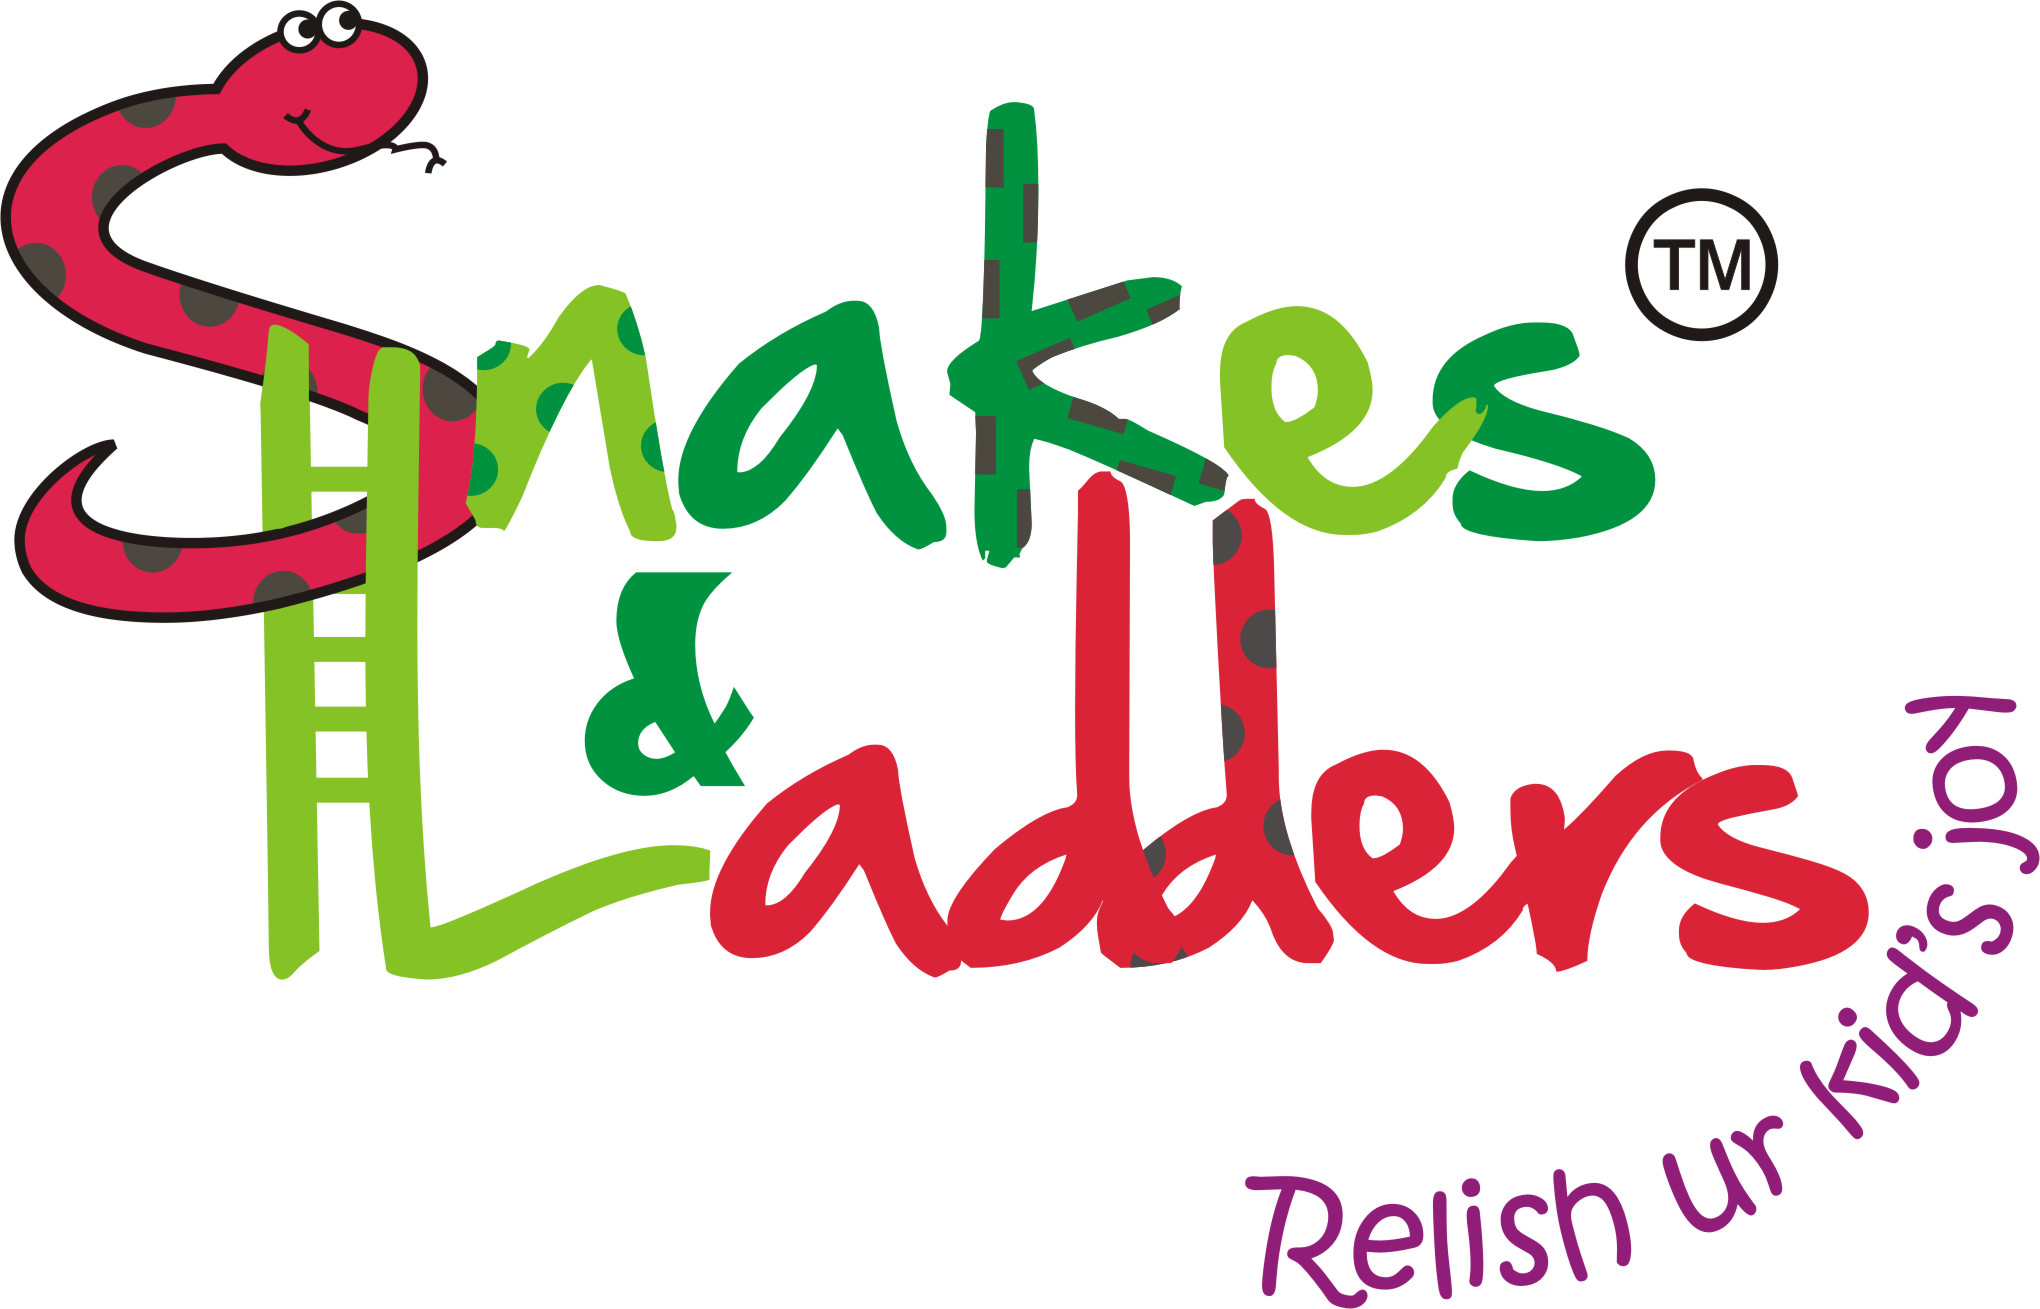 snake and ladder game Logo photo - 1